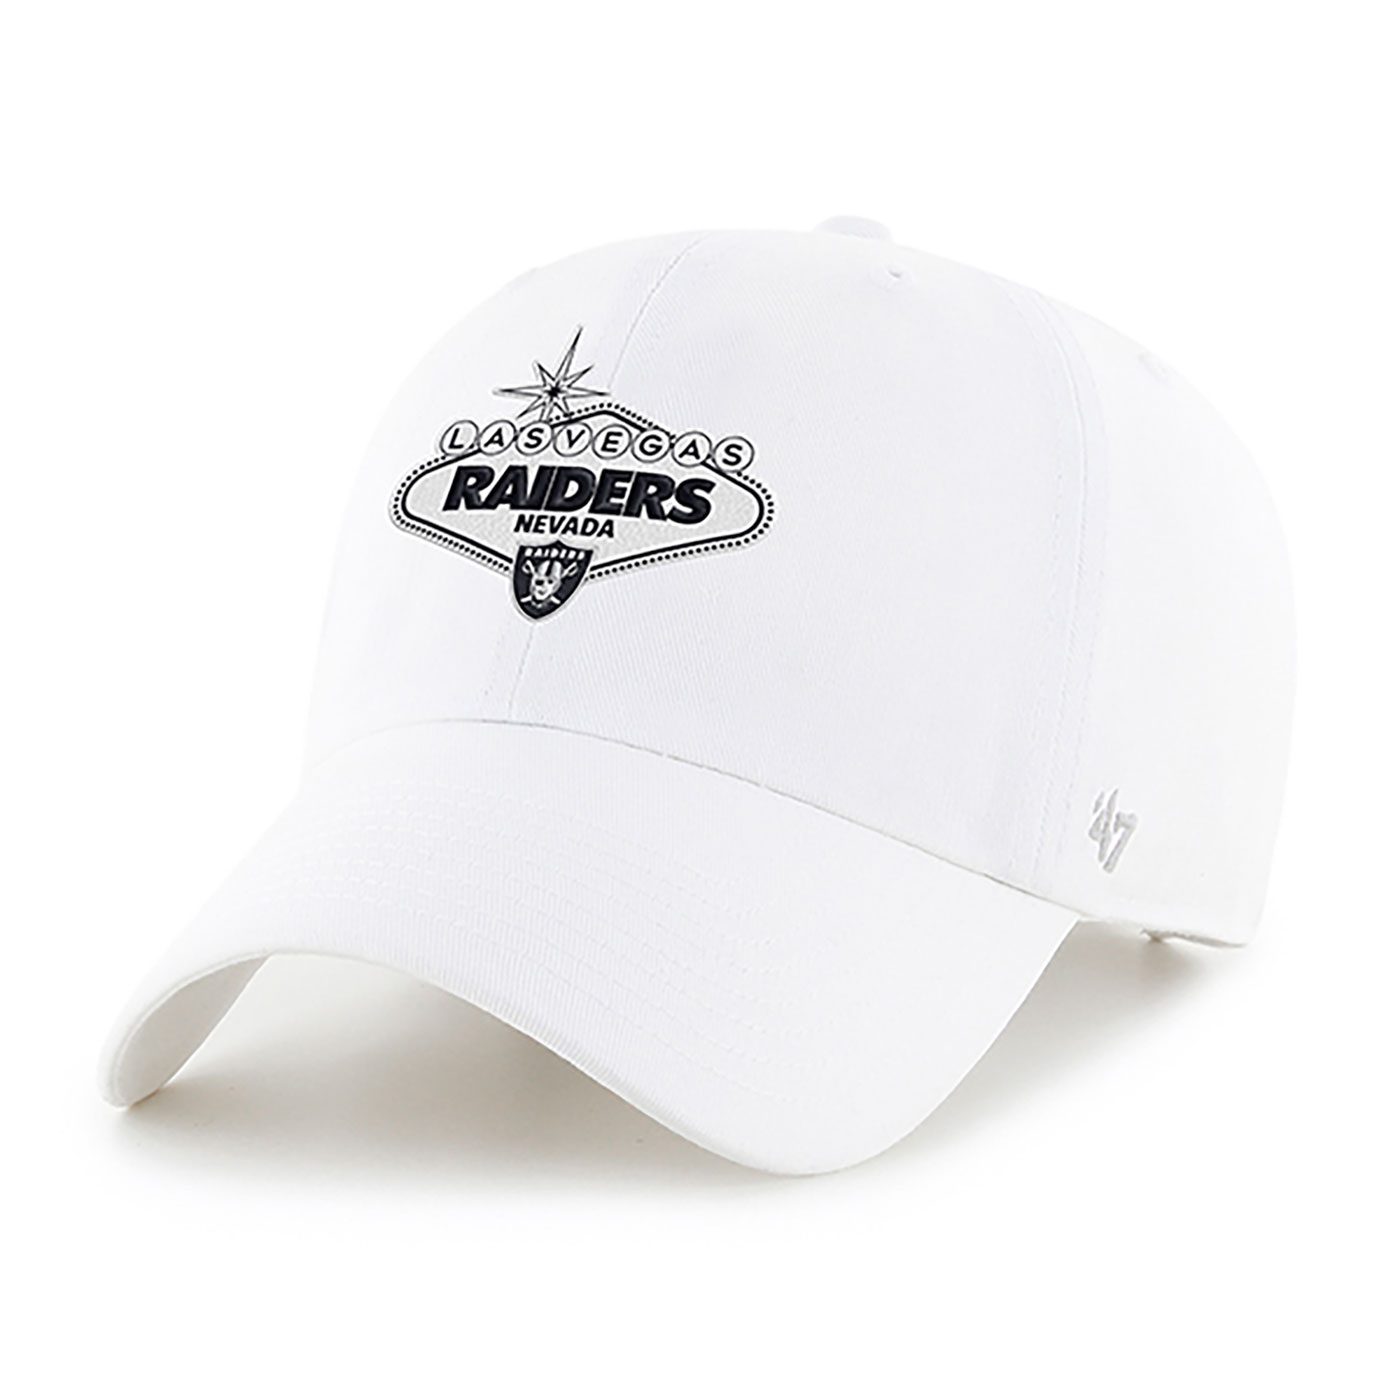 Las Vegas Raiders Pet Baseball Hat